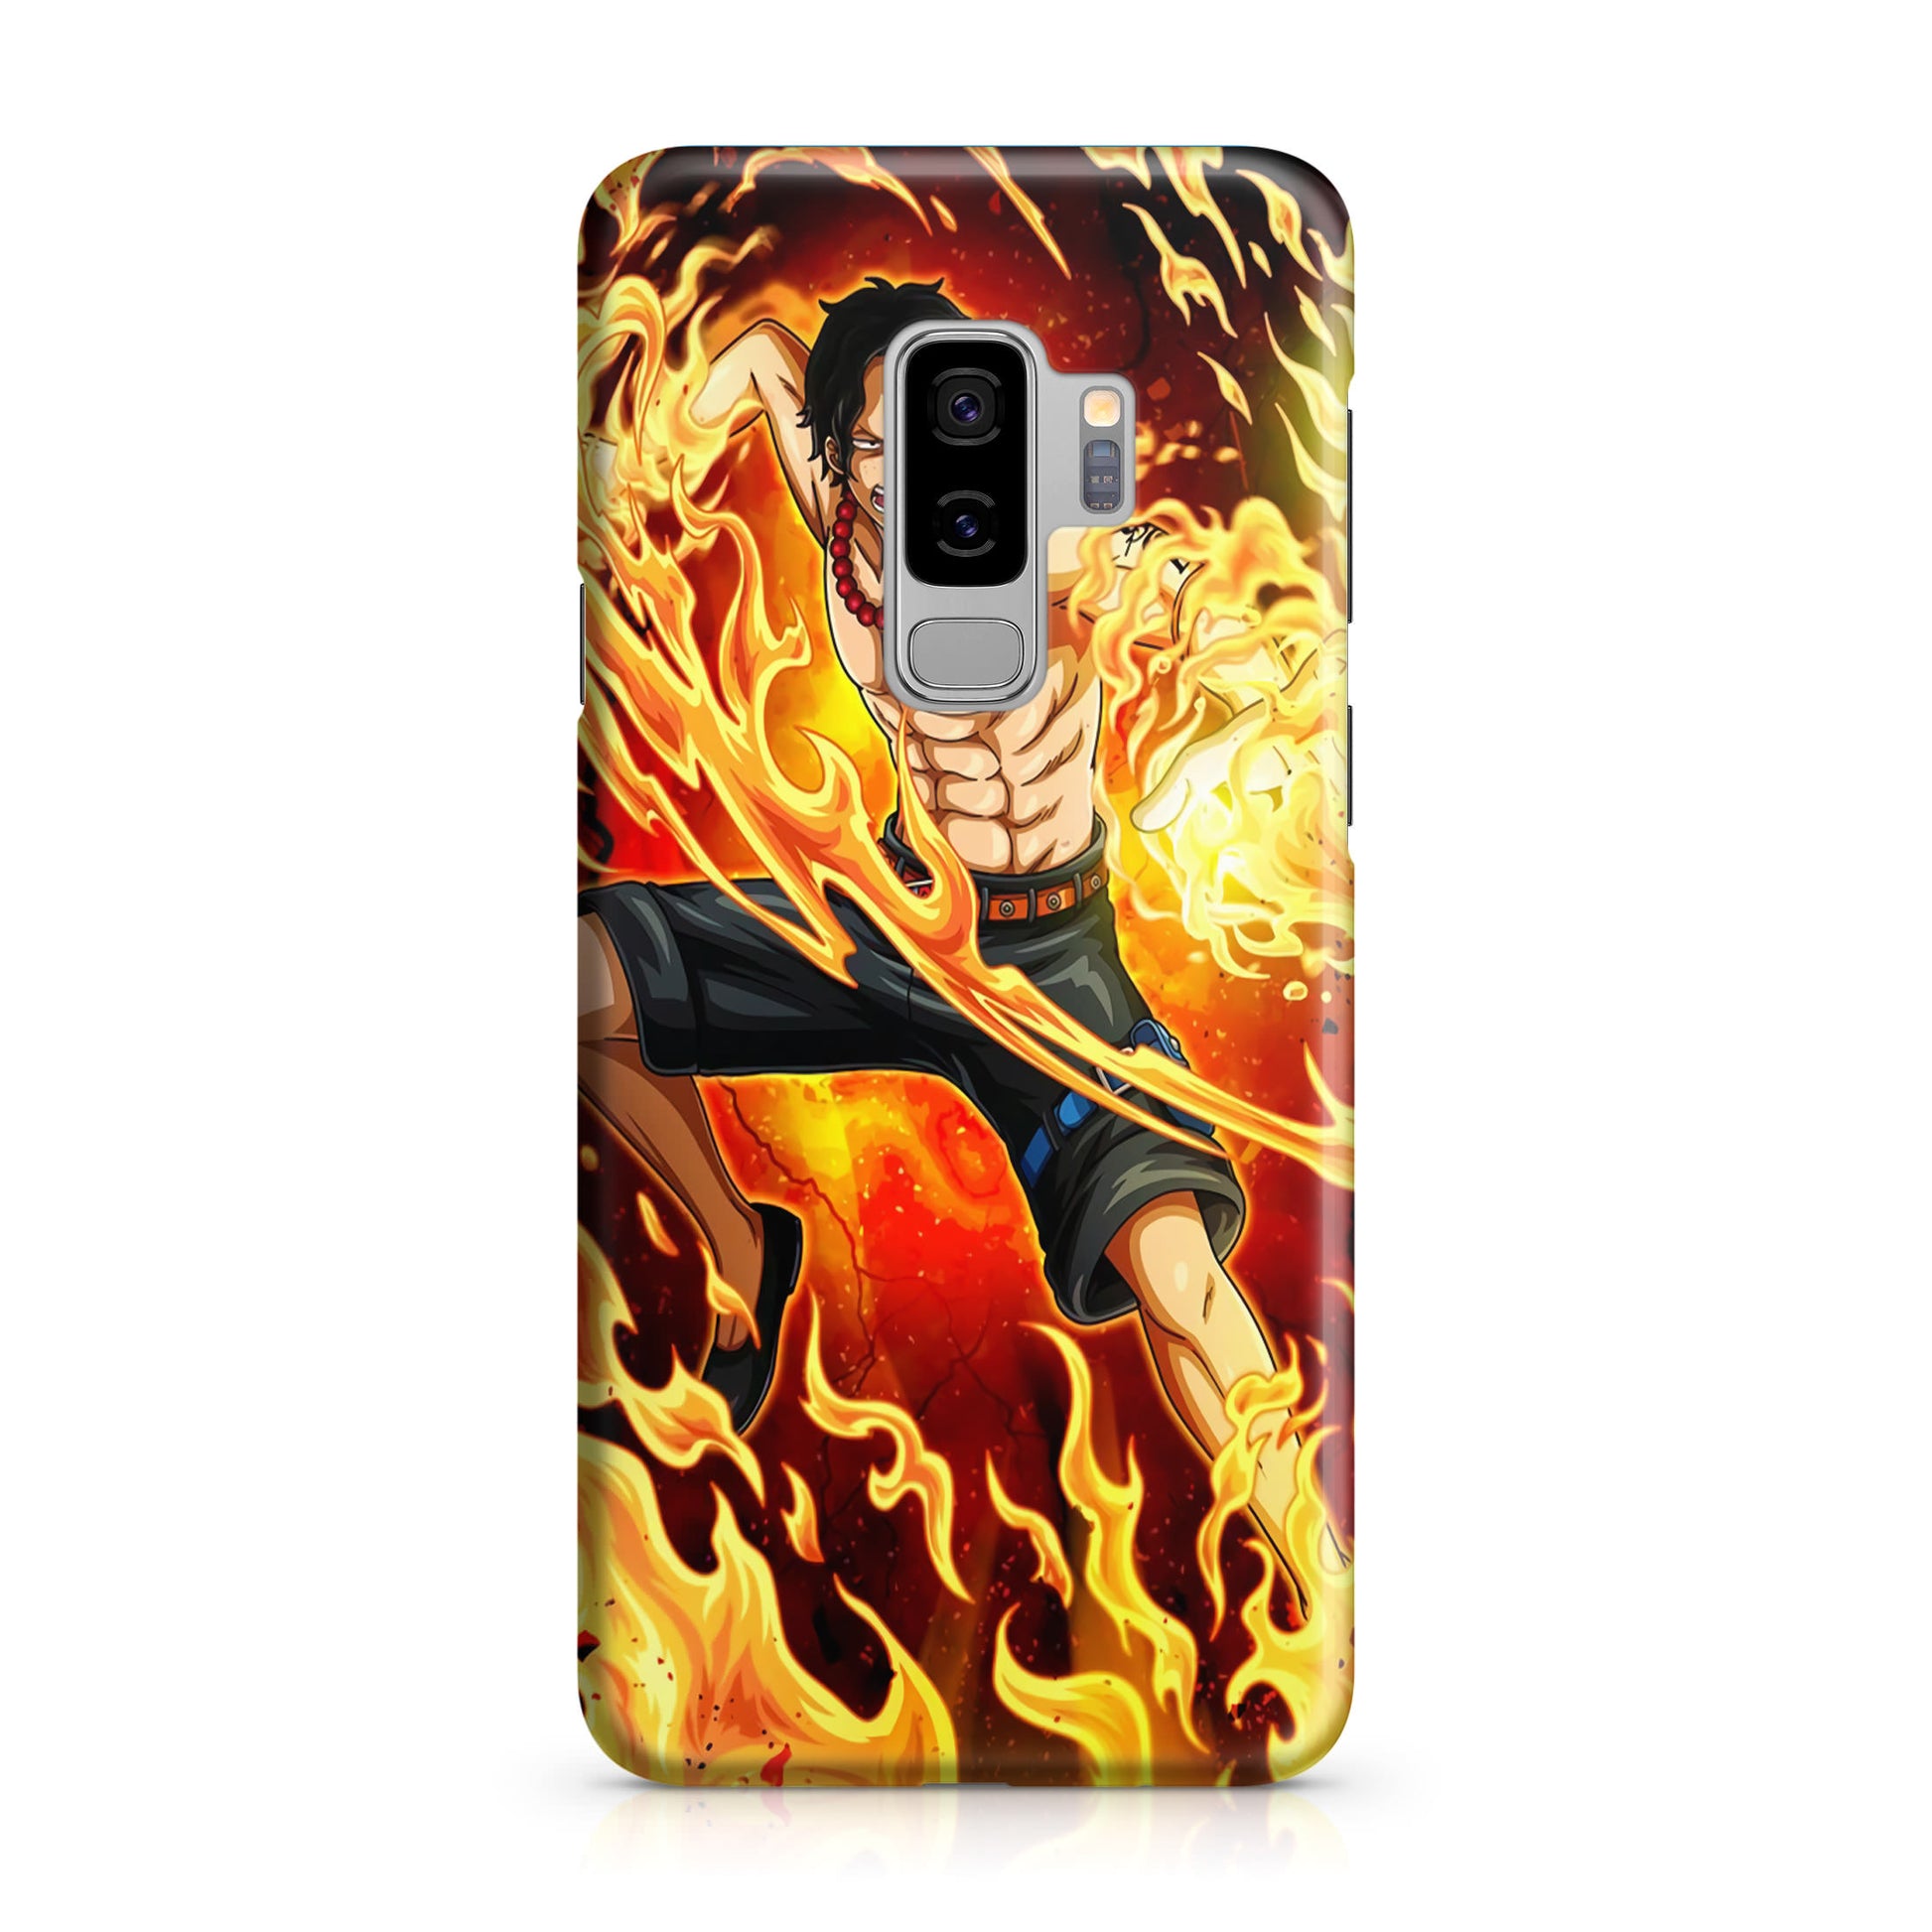 Ace Fire Fist Galaxy S9 Plus Case